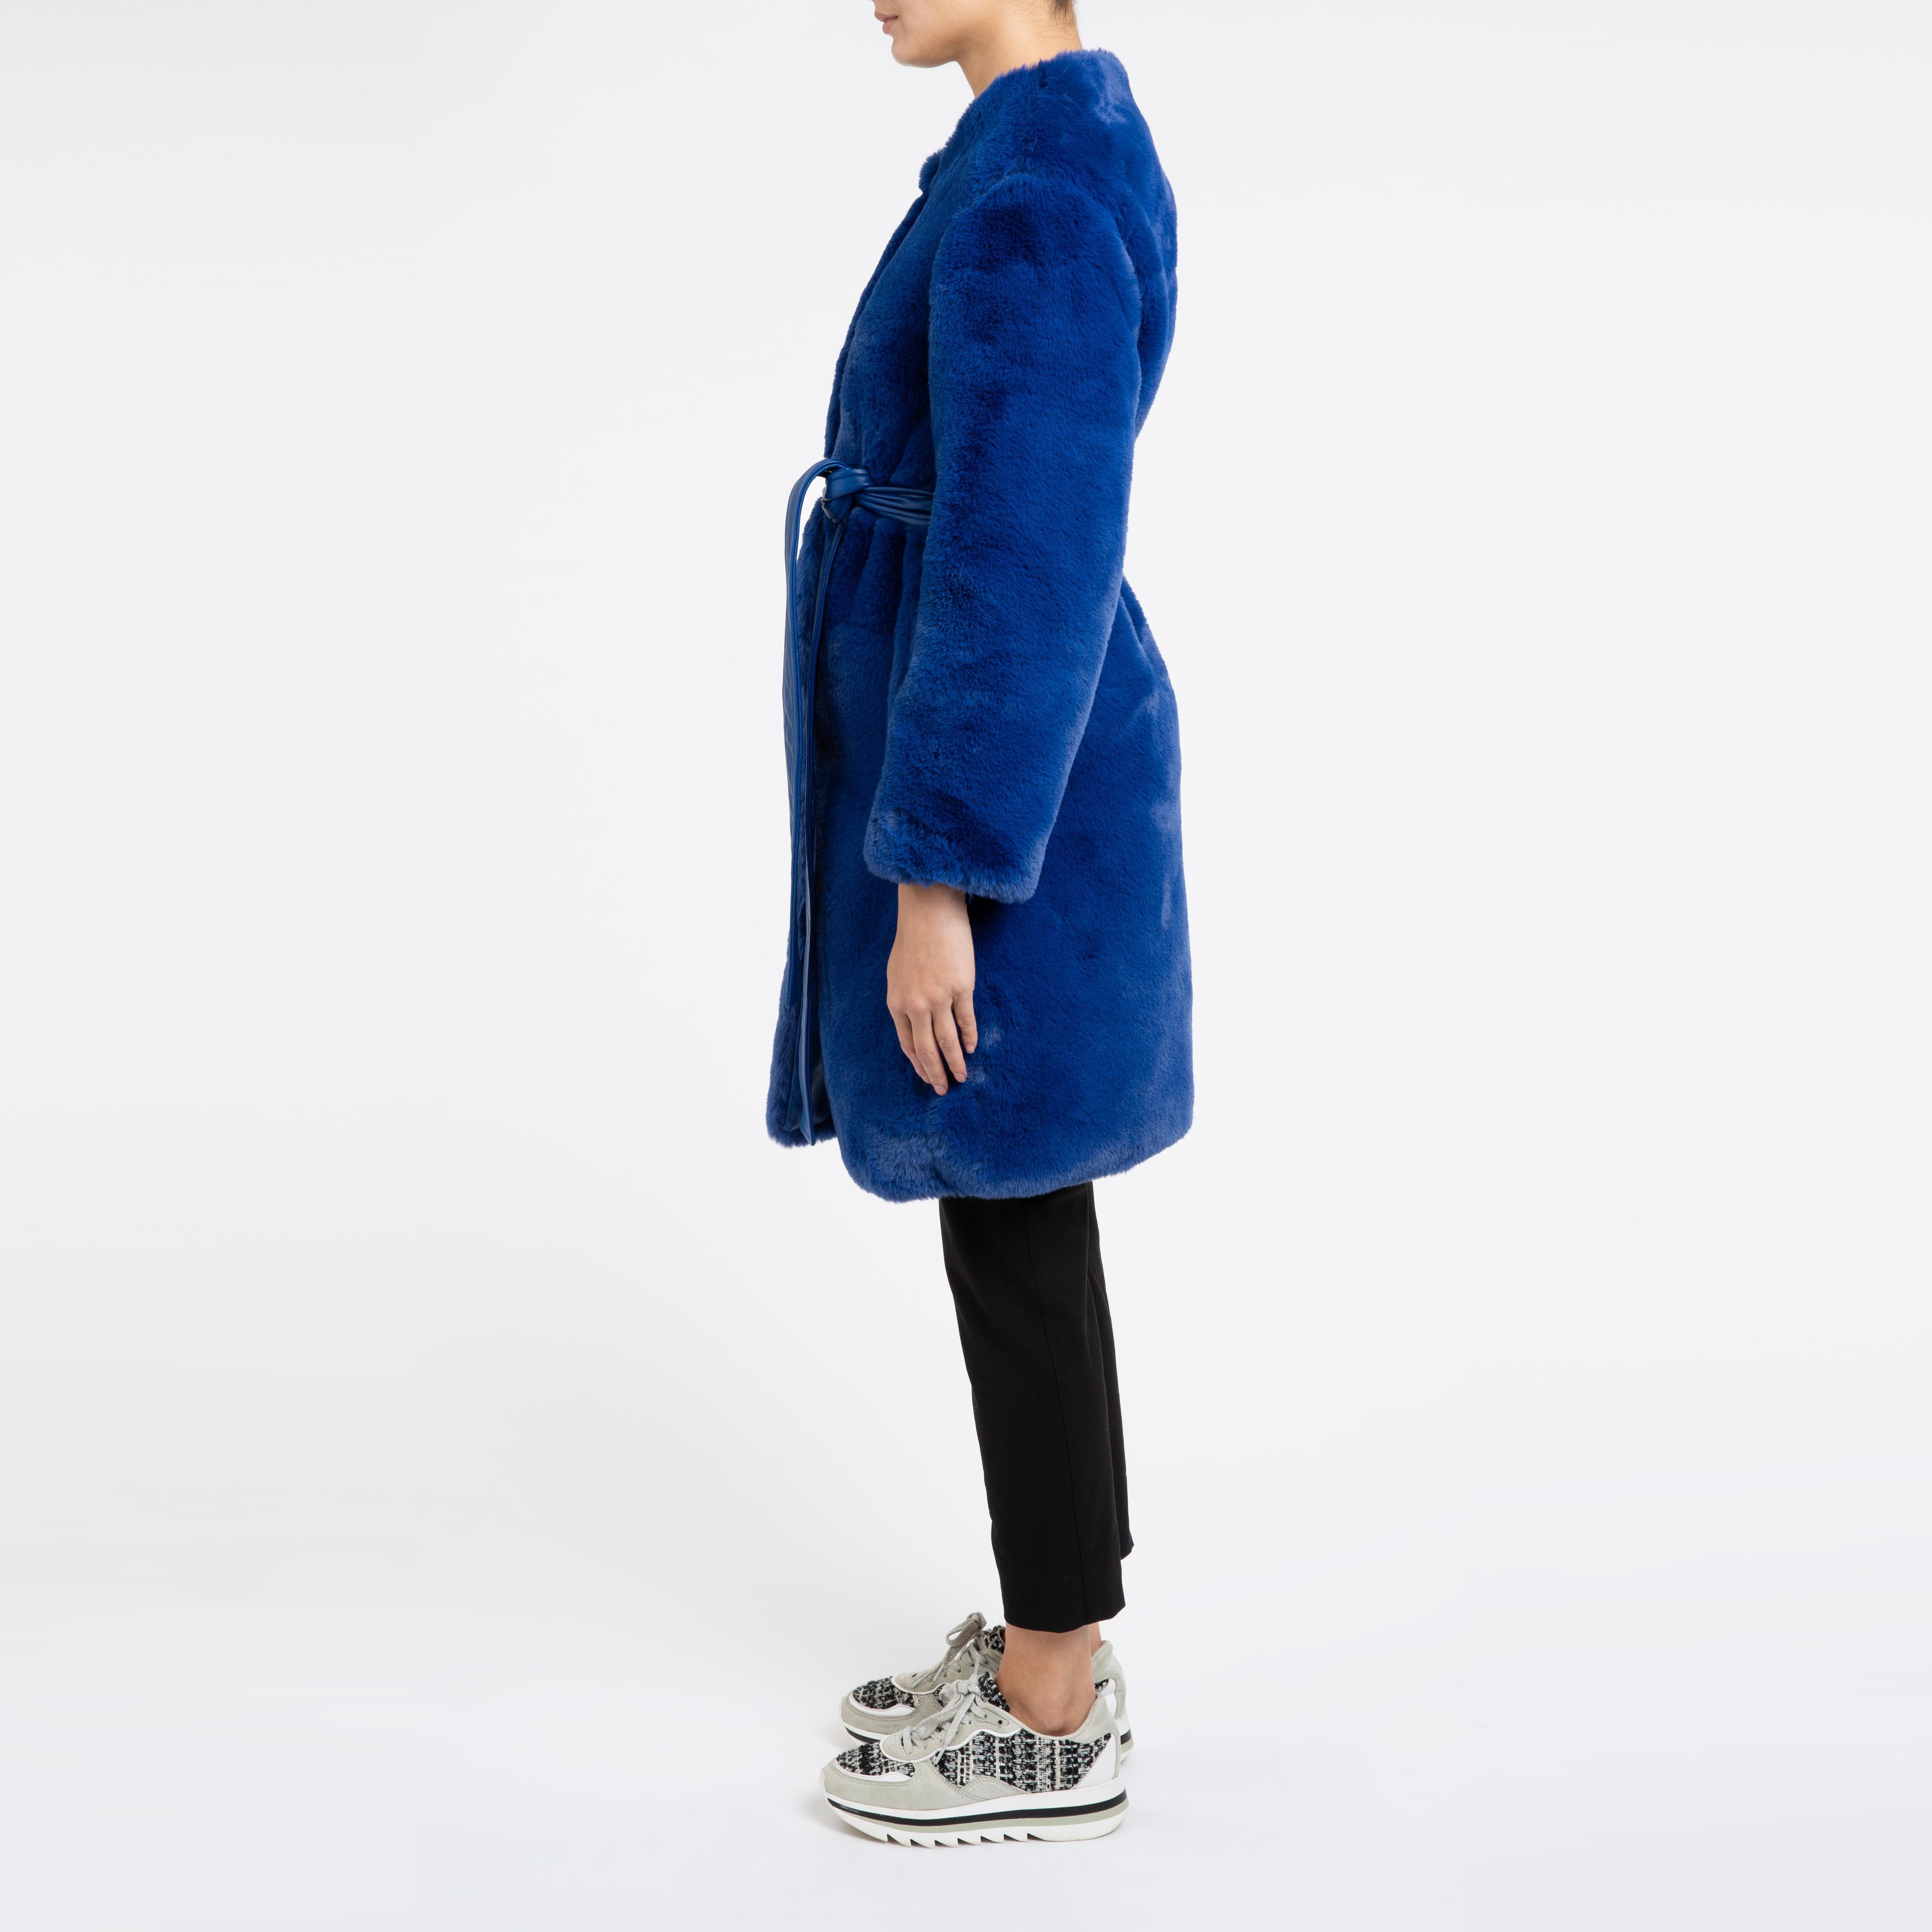 Verheyen London Serena  Collarless Faux Fur Coat in Blue - Size uk 12  For Sale 4